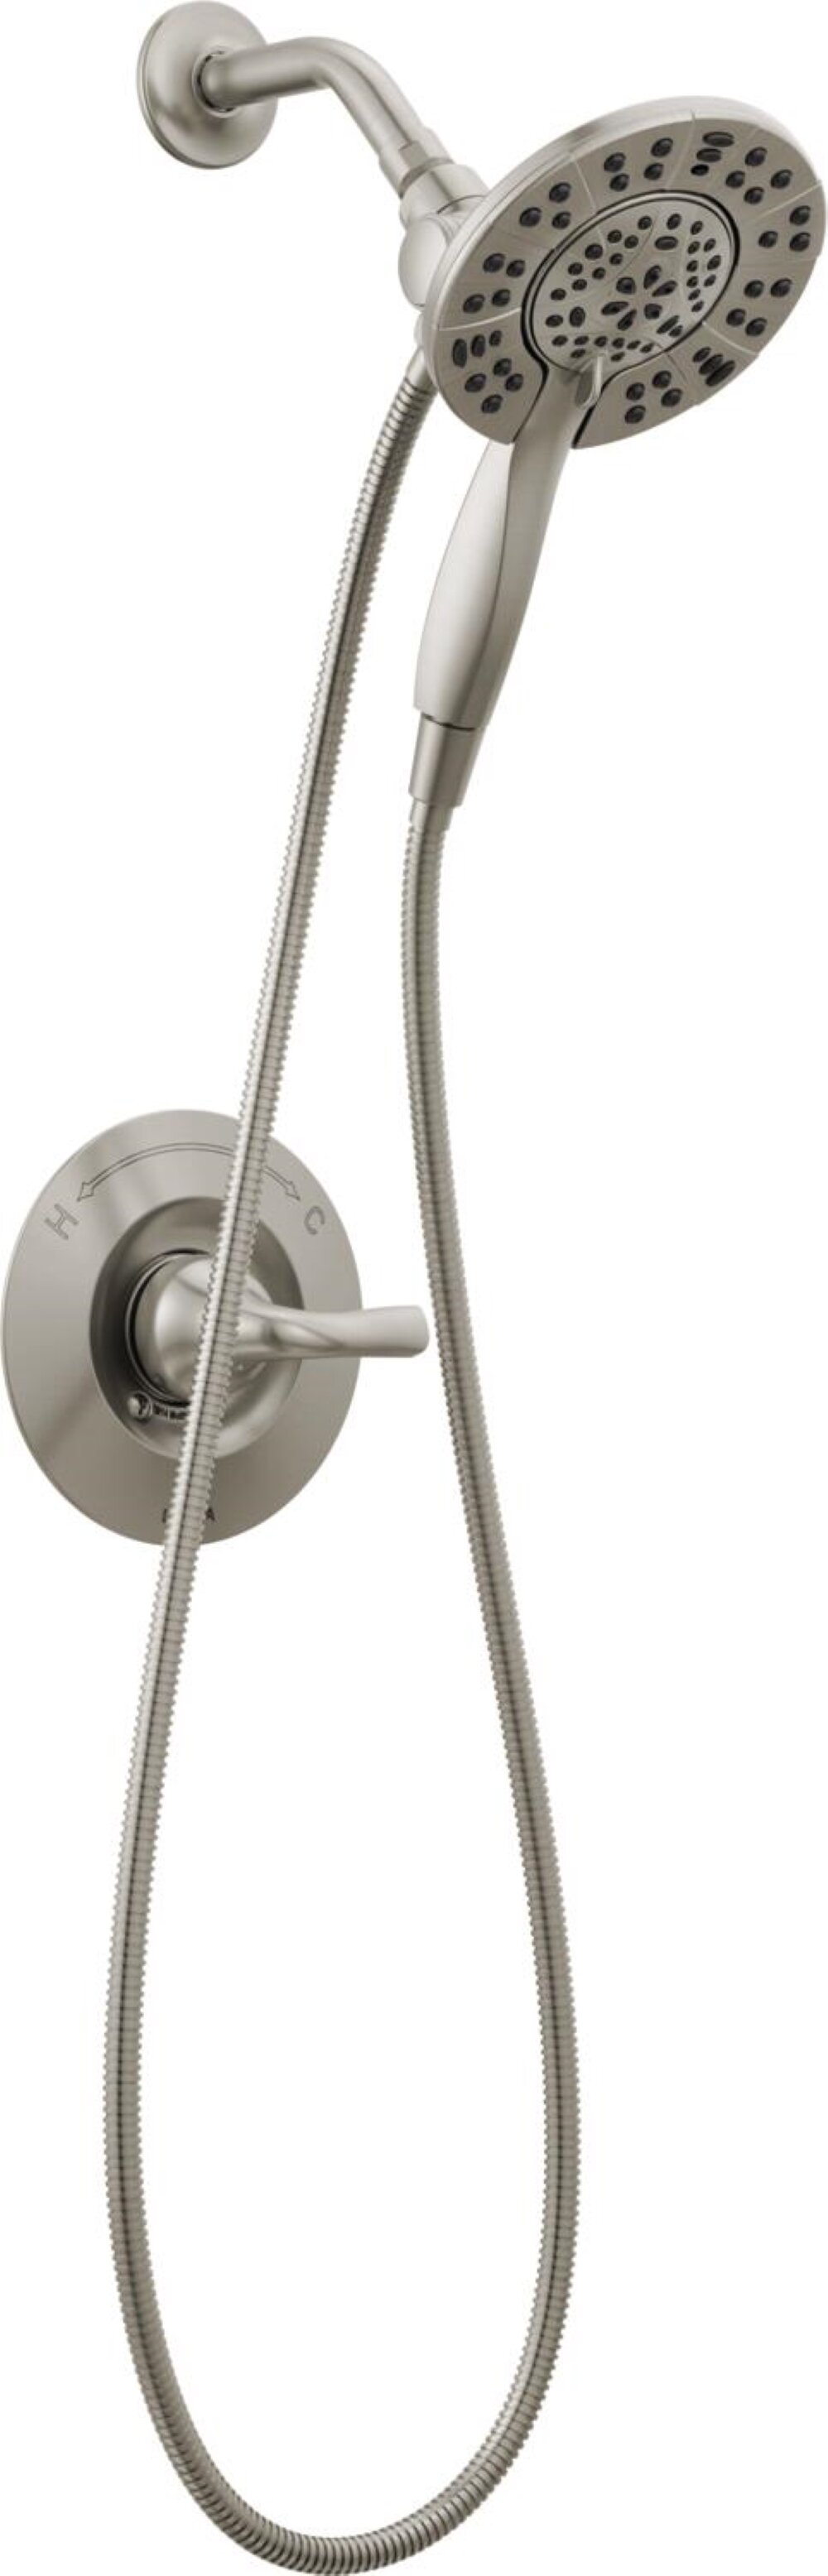 Delta Arvo Single-Function Shower Faucet Set, Shower Trim Kit with